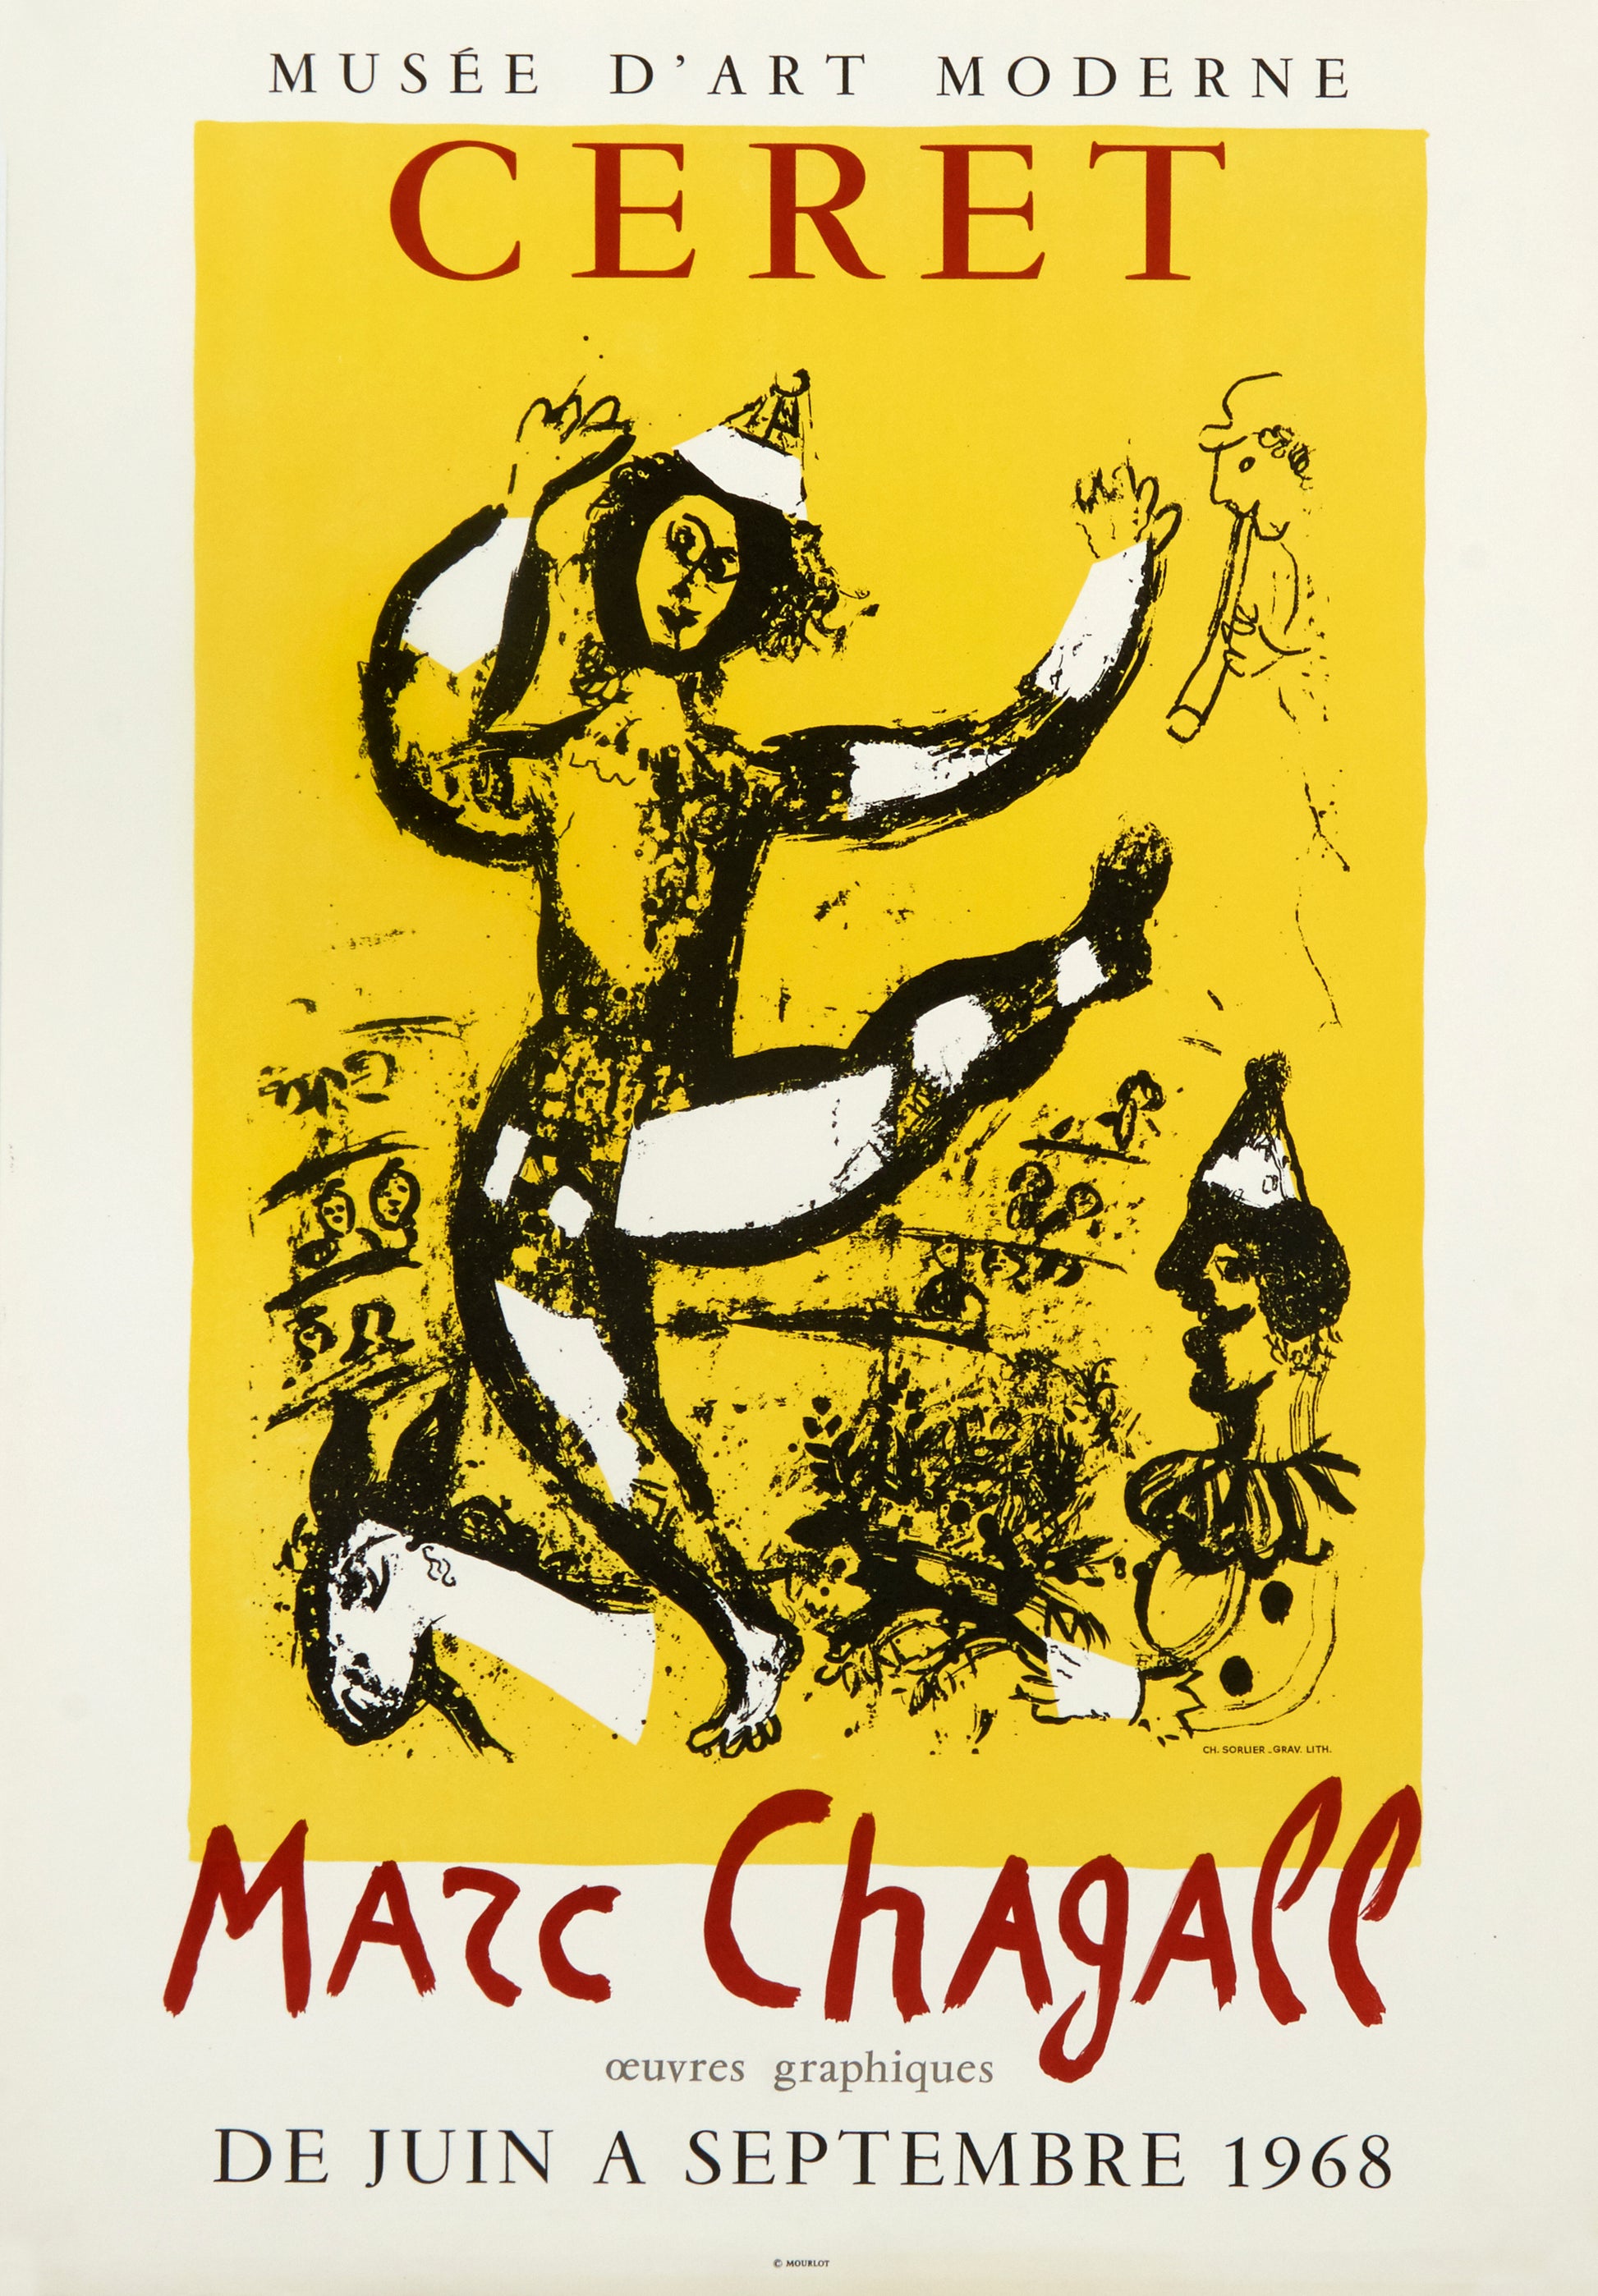 Le Cirque (after) Marc Chagall, 1968 - Mourlot Editions - Fine_Art - Poster - Lithograph - Wall Art - Vintage - Prints - Original